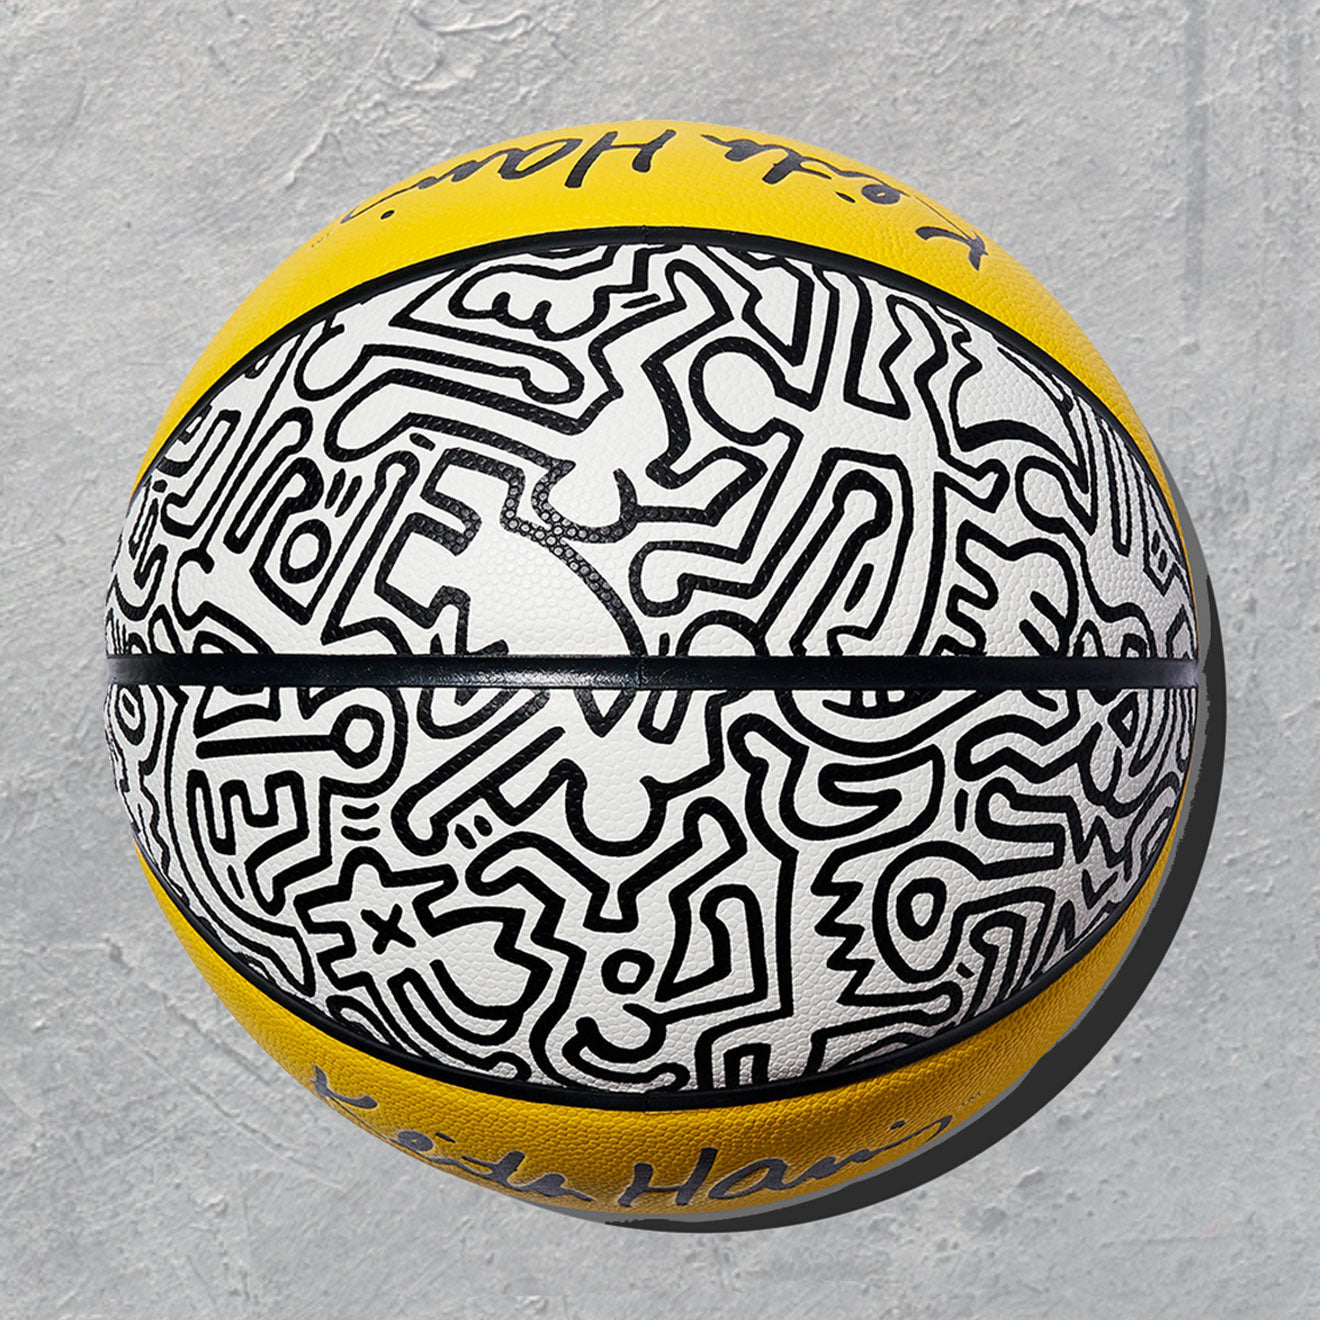 Official Keith Haring “Tokyo Fabric” basketball